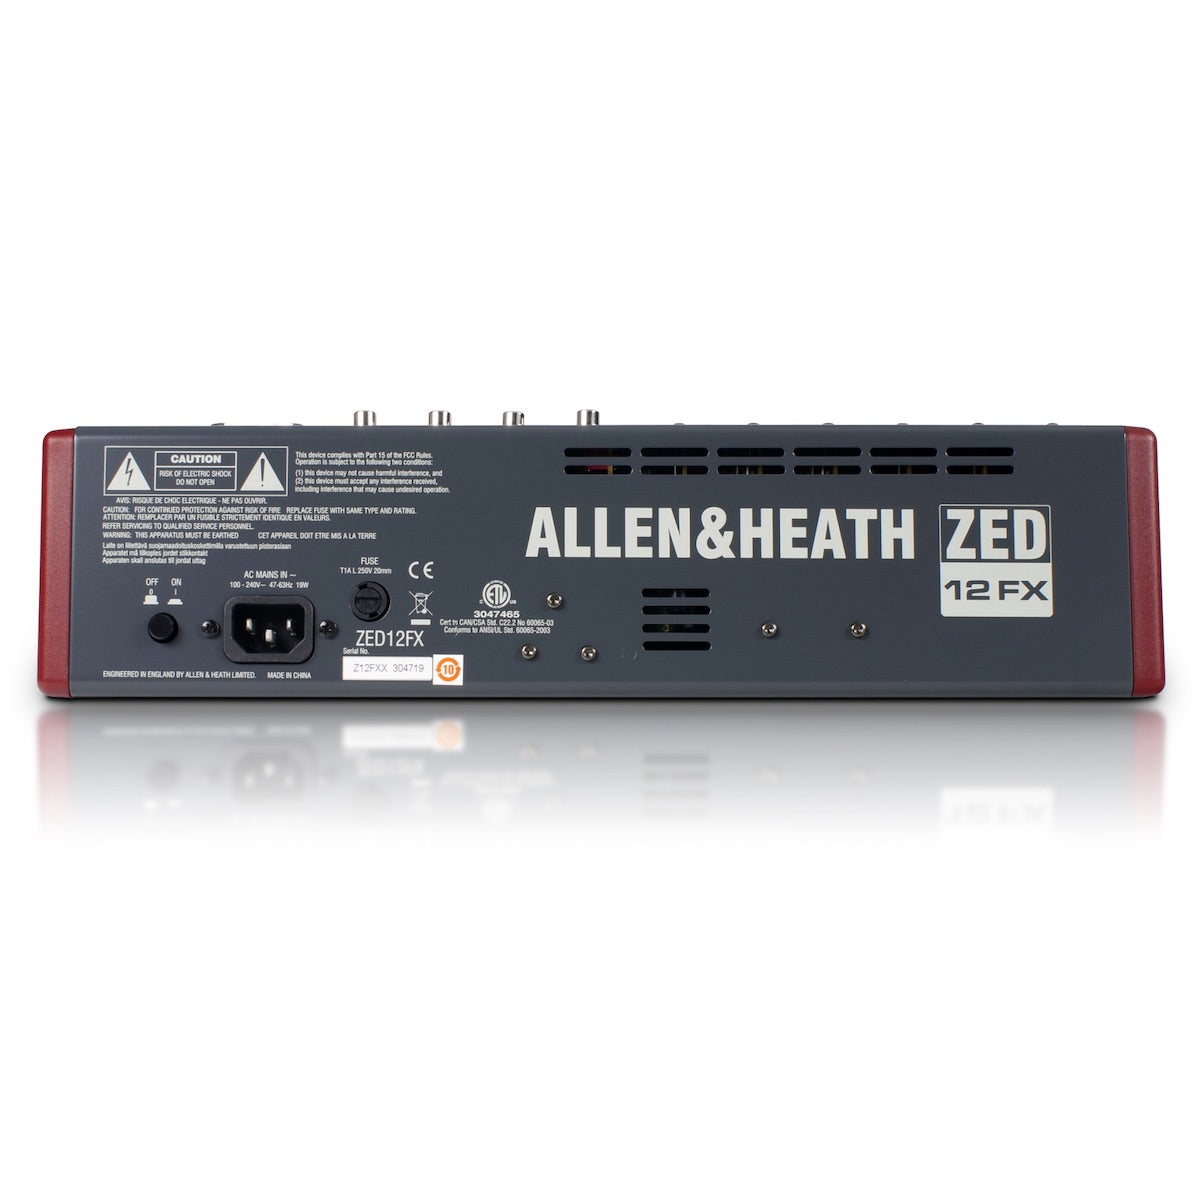 Allen & Heath ZED-12FX 12-Channel Analog USB Mixer with Effects, rear